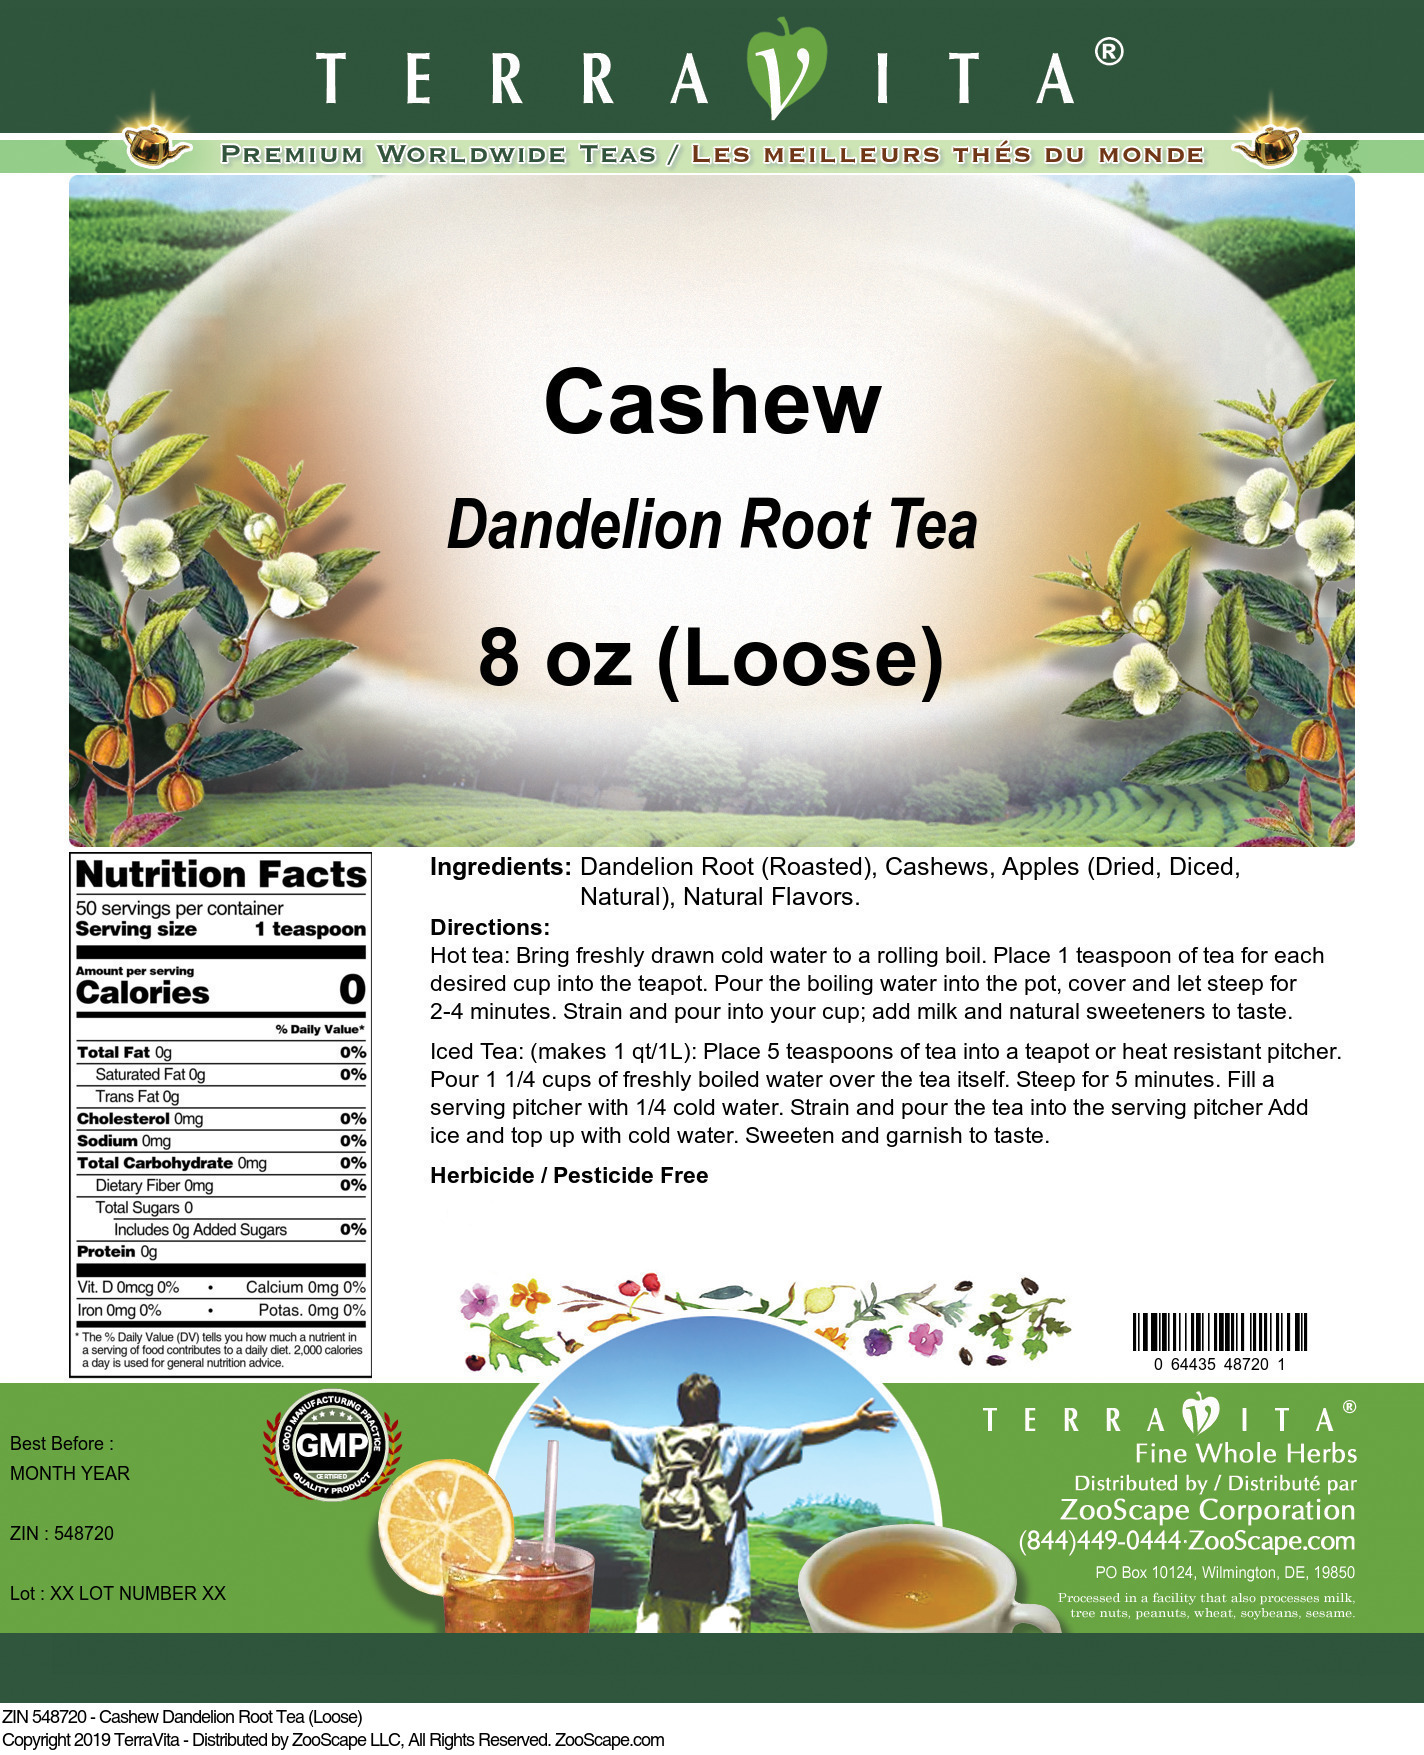 Cashew Dandelion Root Tea (Loose) - Label